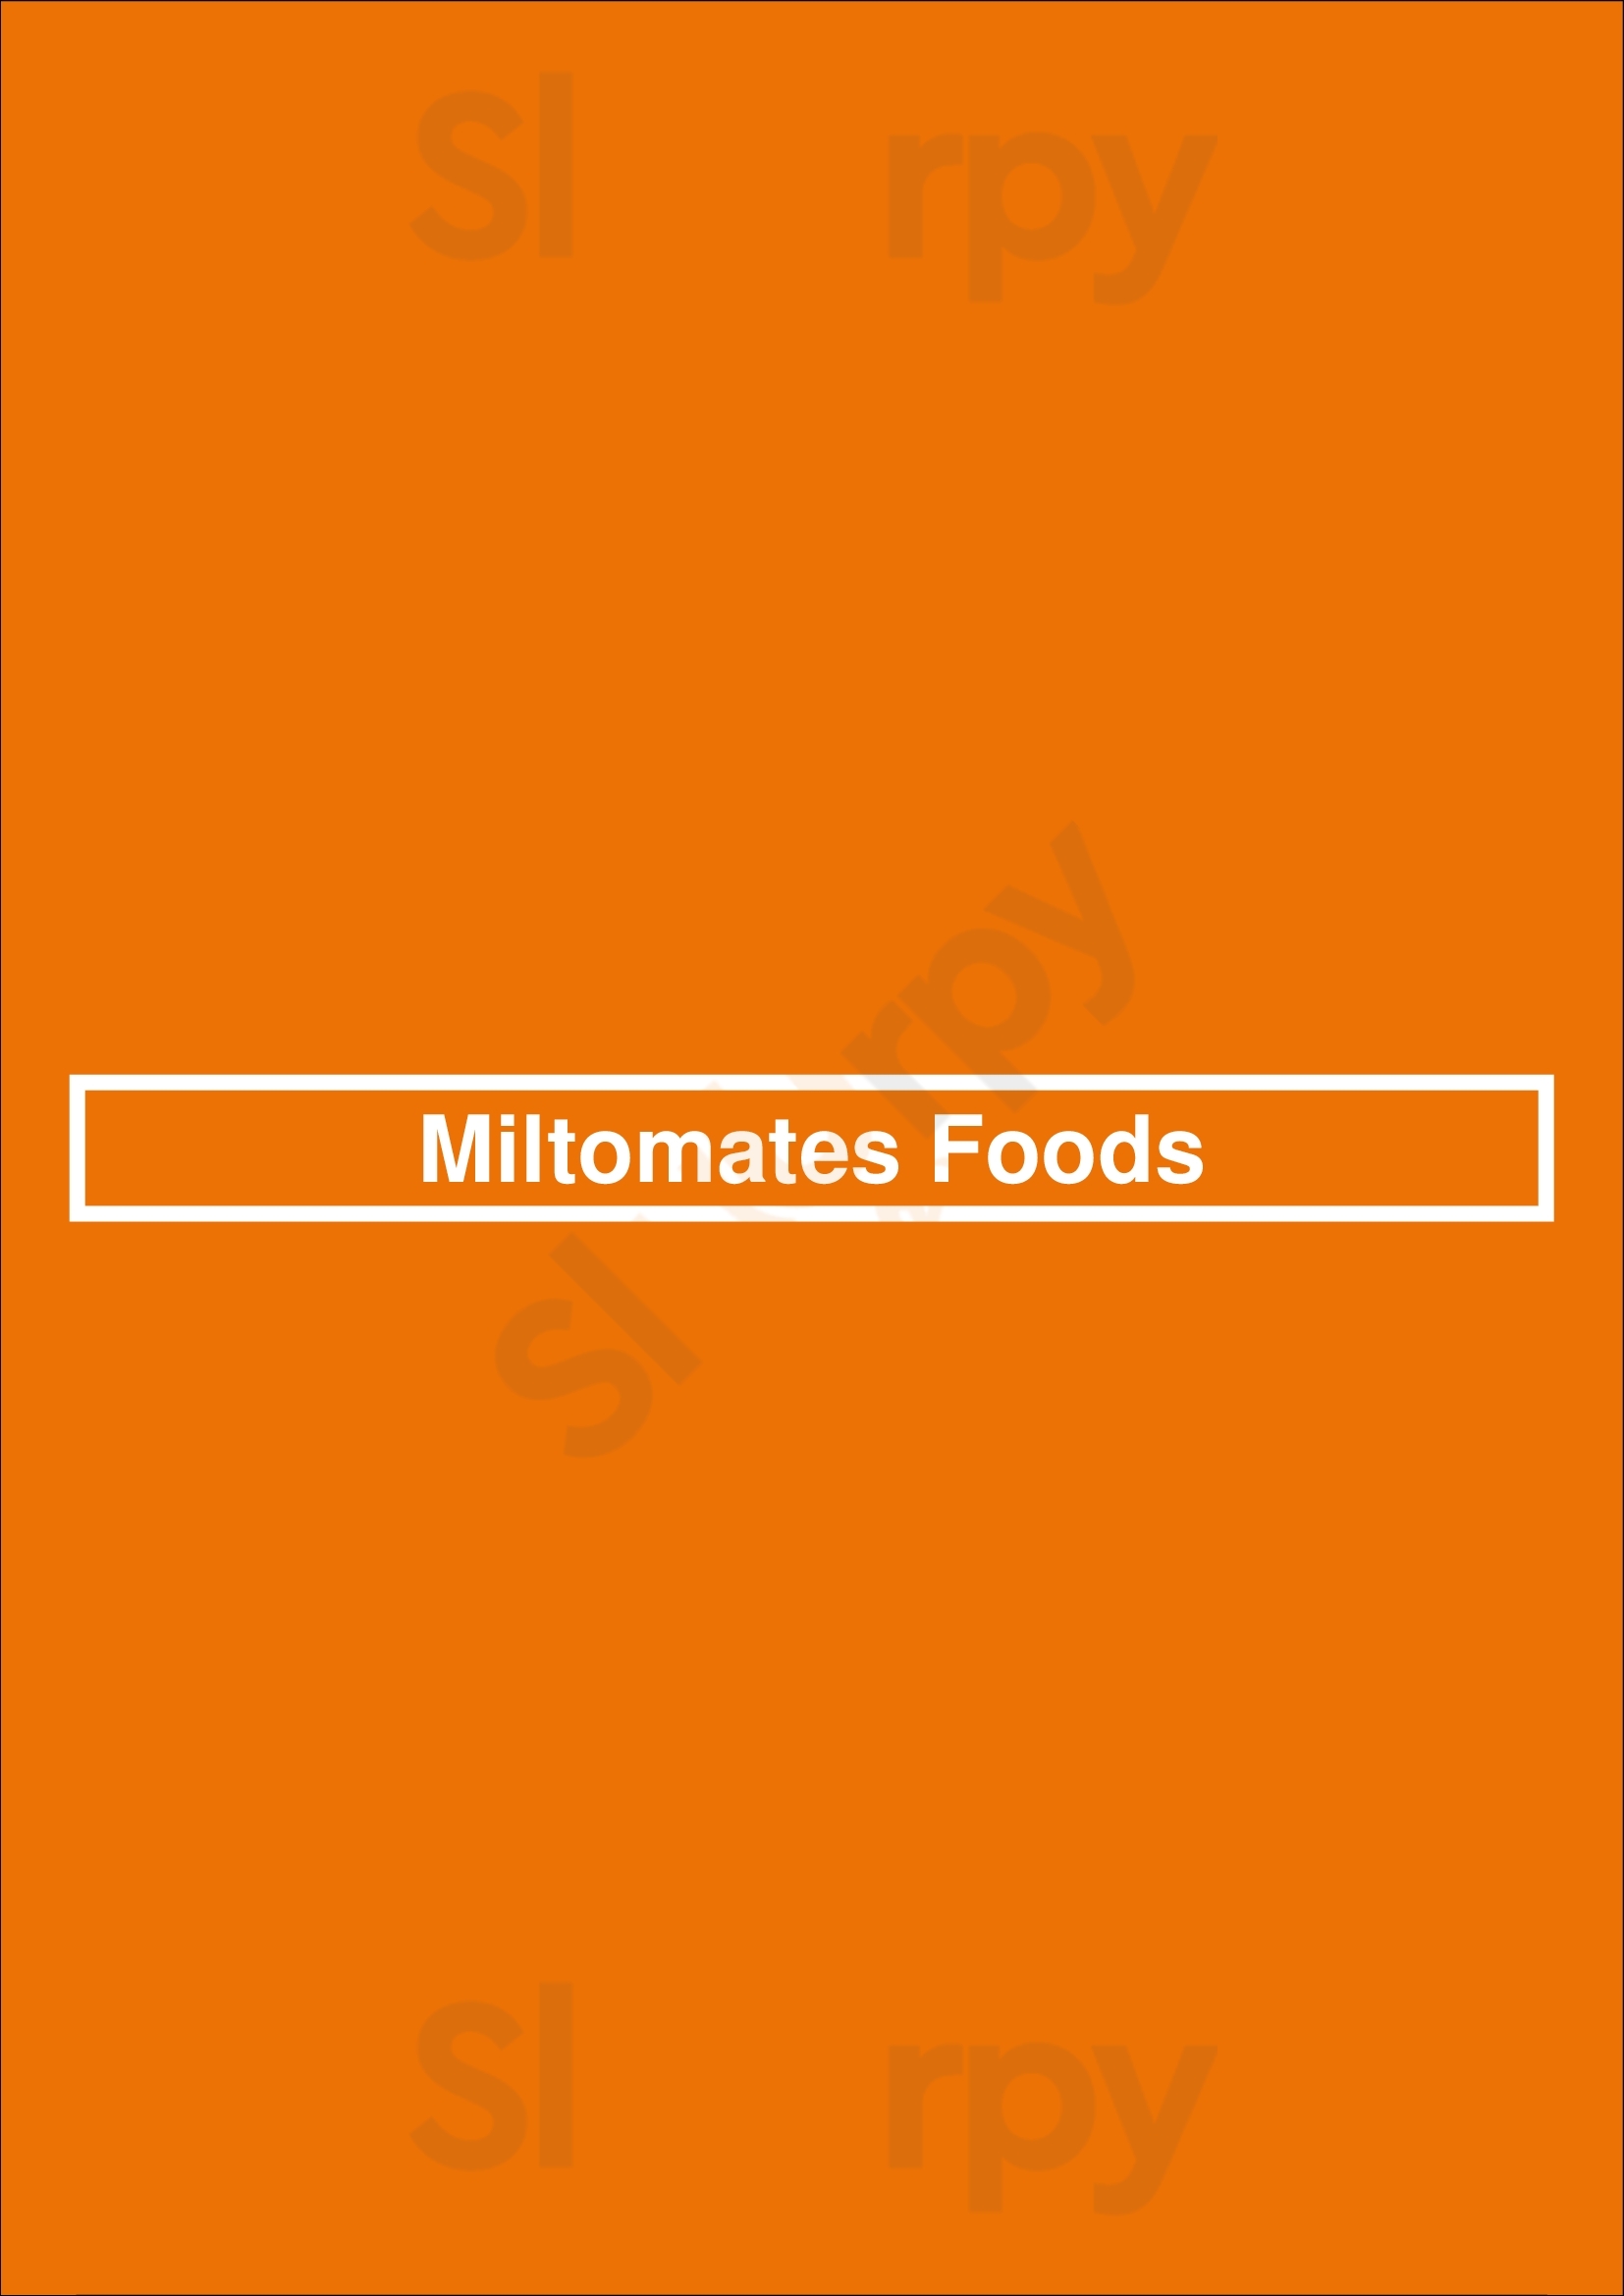 Miltomates Foods Surrey Menu - 1